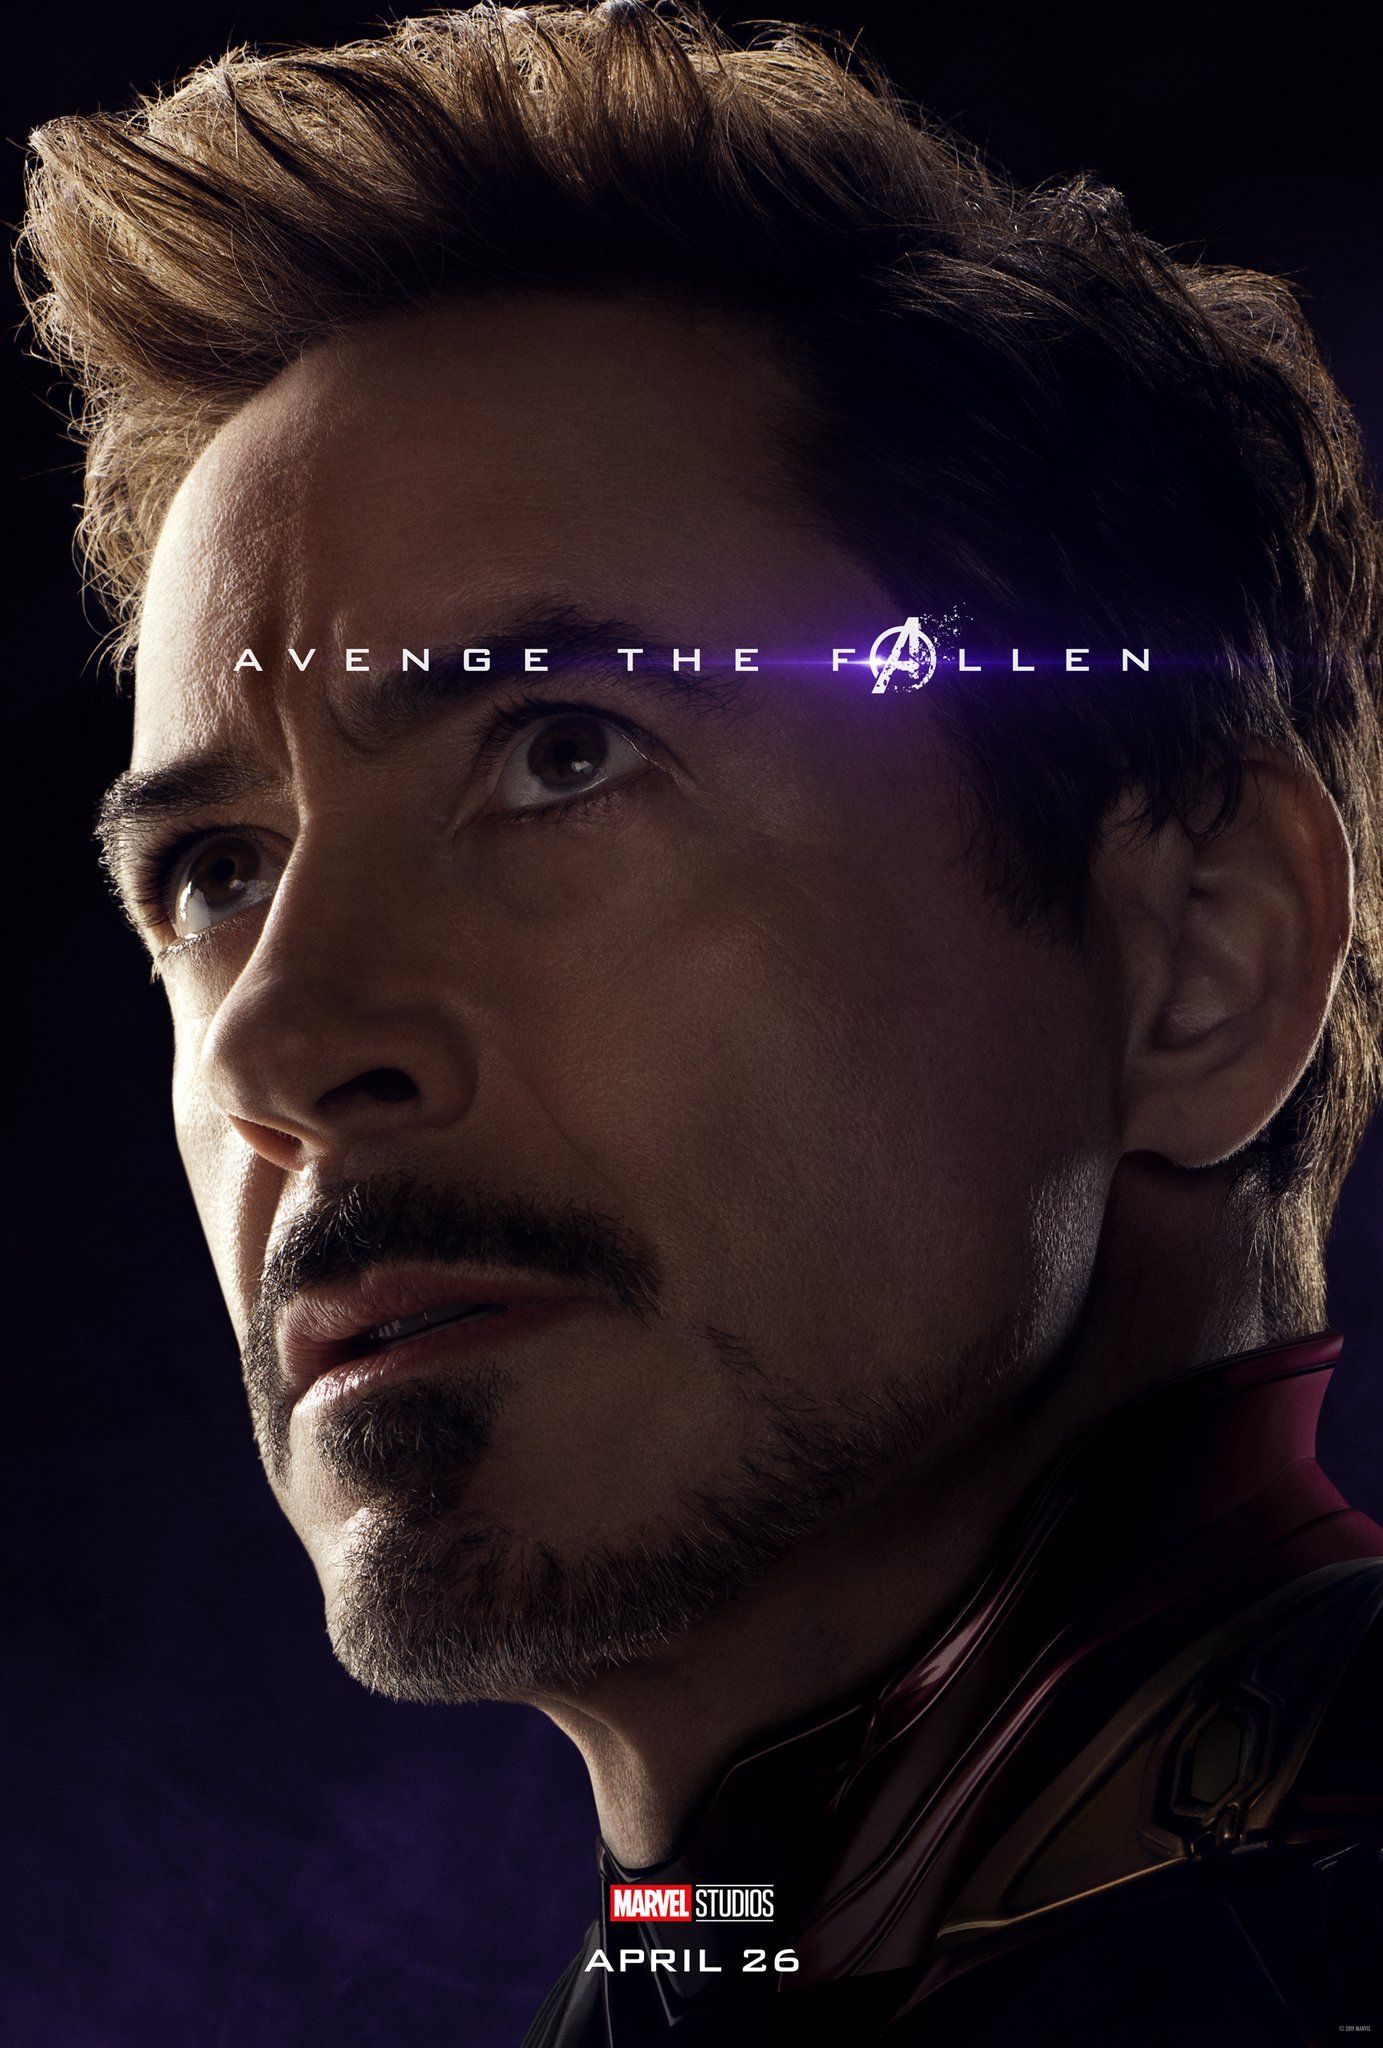 Robert Downey Jr Had Mixed Emotions on The Avengers Endgame Ending